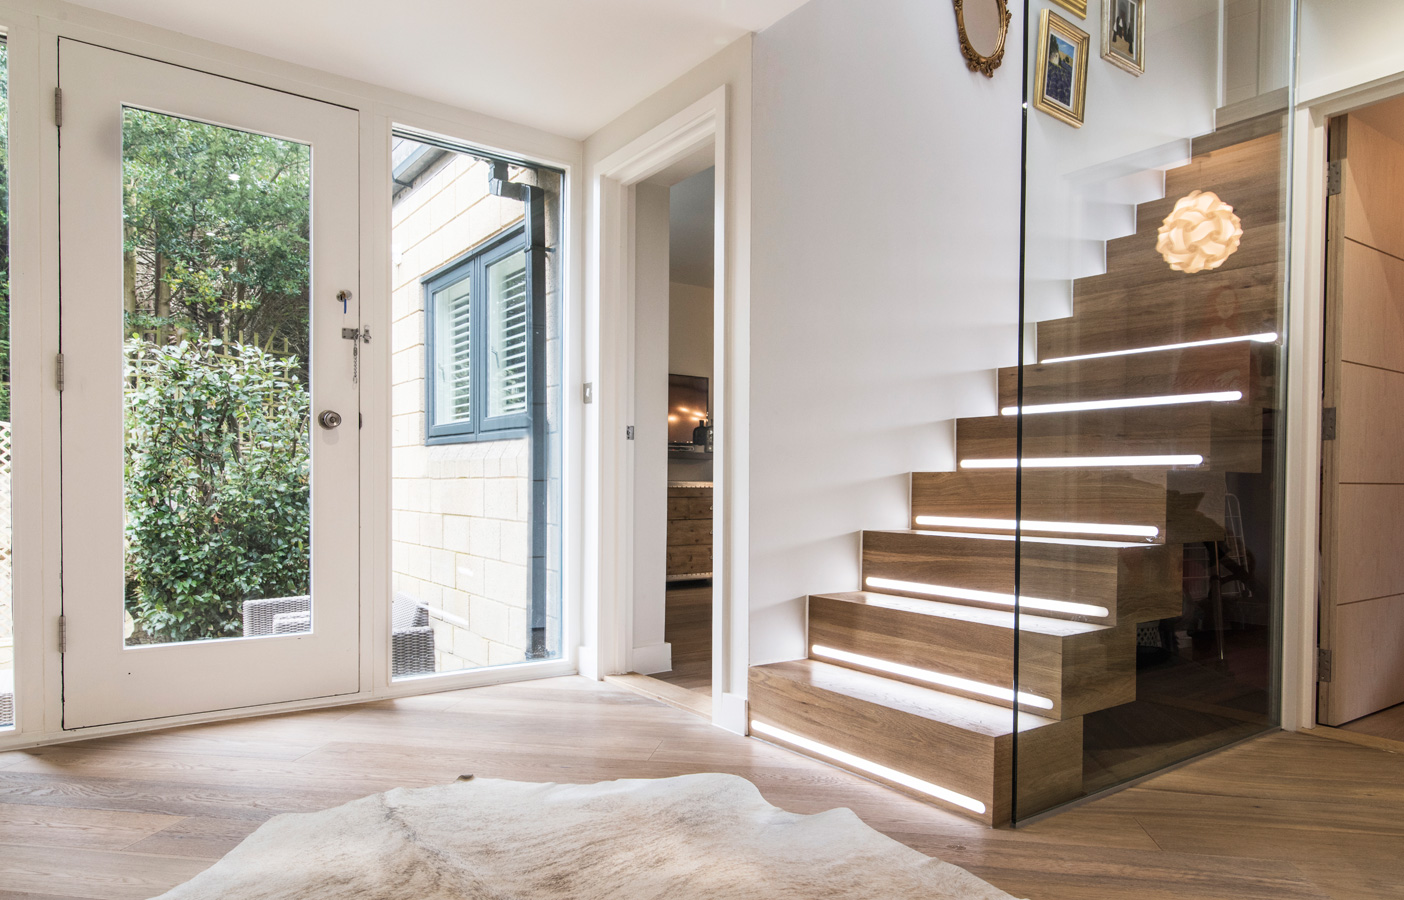 Aldworth James & Bond | Staircase for a modern family home in Bath by AJ&B